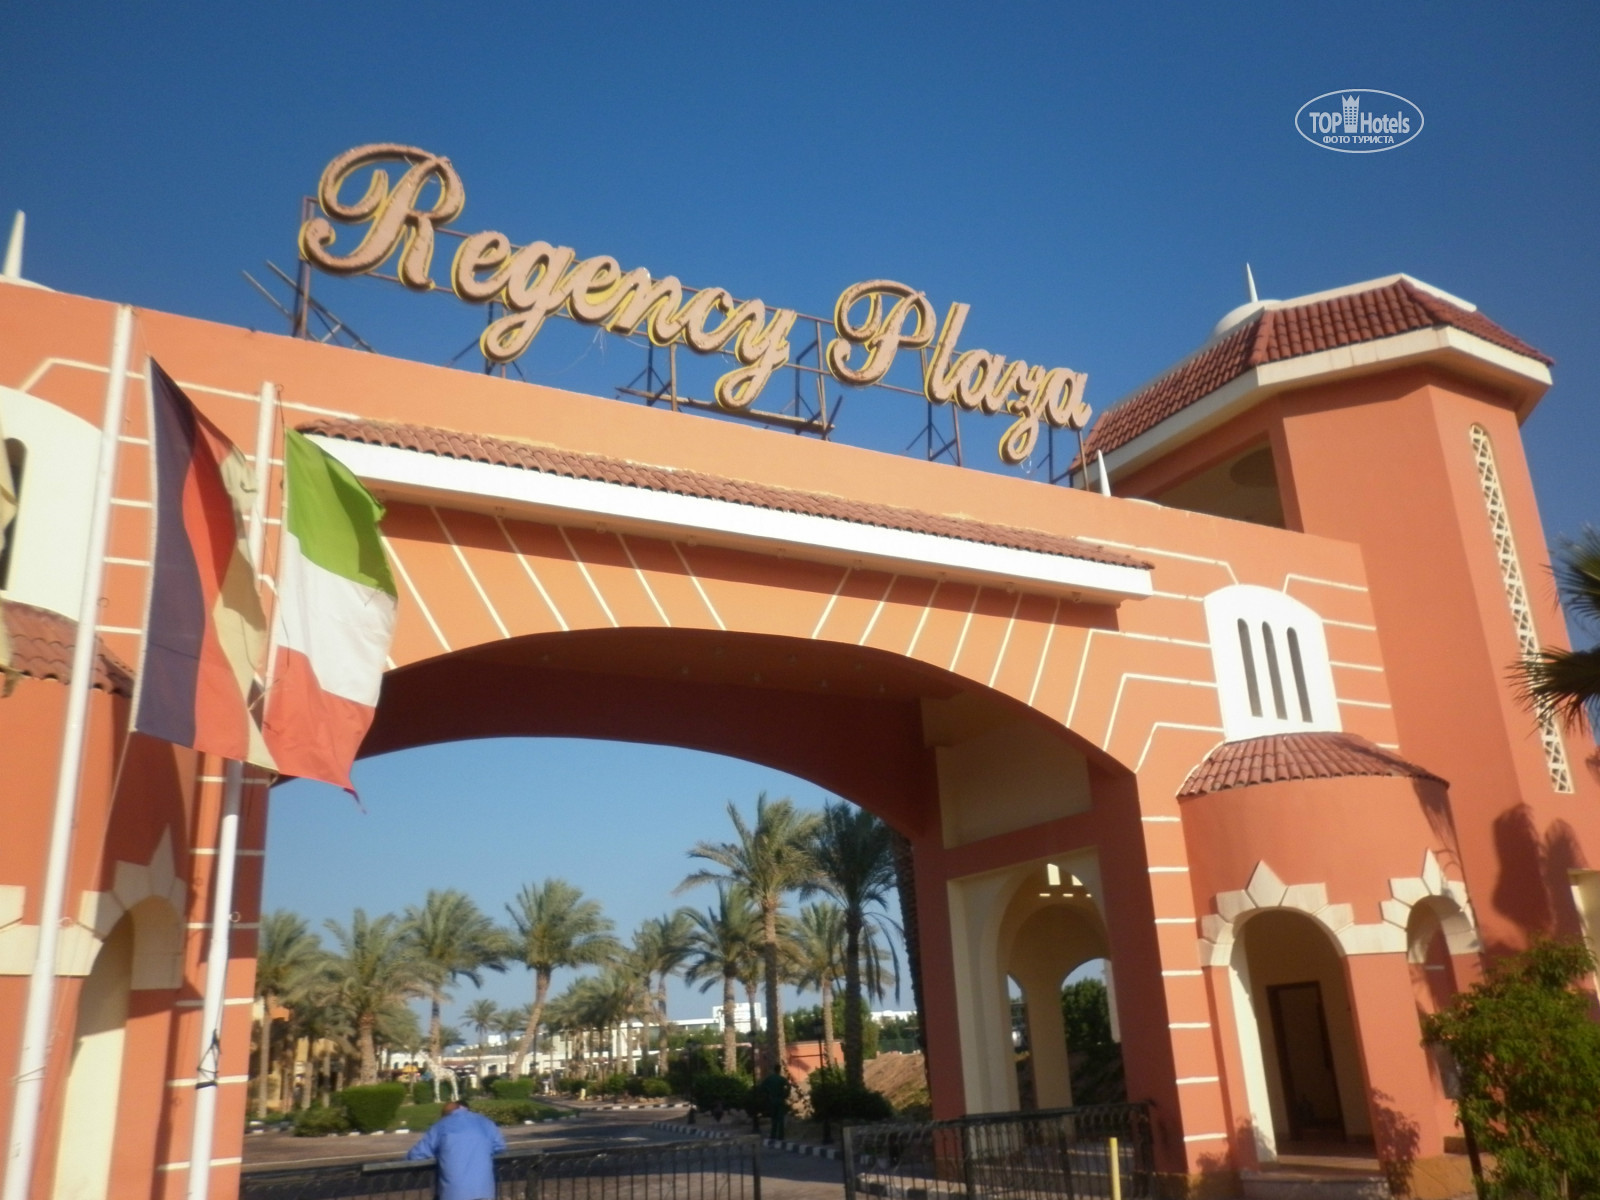 Регенси плаза аква парк. Отель Regency Plaza Aqua Park Spa 5. Редженси Плаза Египет. Египет,Шарм-Эль-Шейх,Regency Plaza Aqua Park. Египет отель Редженси Плаза.